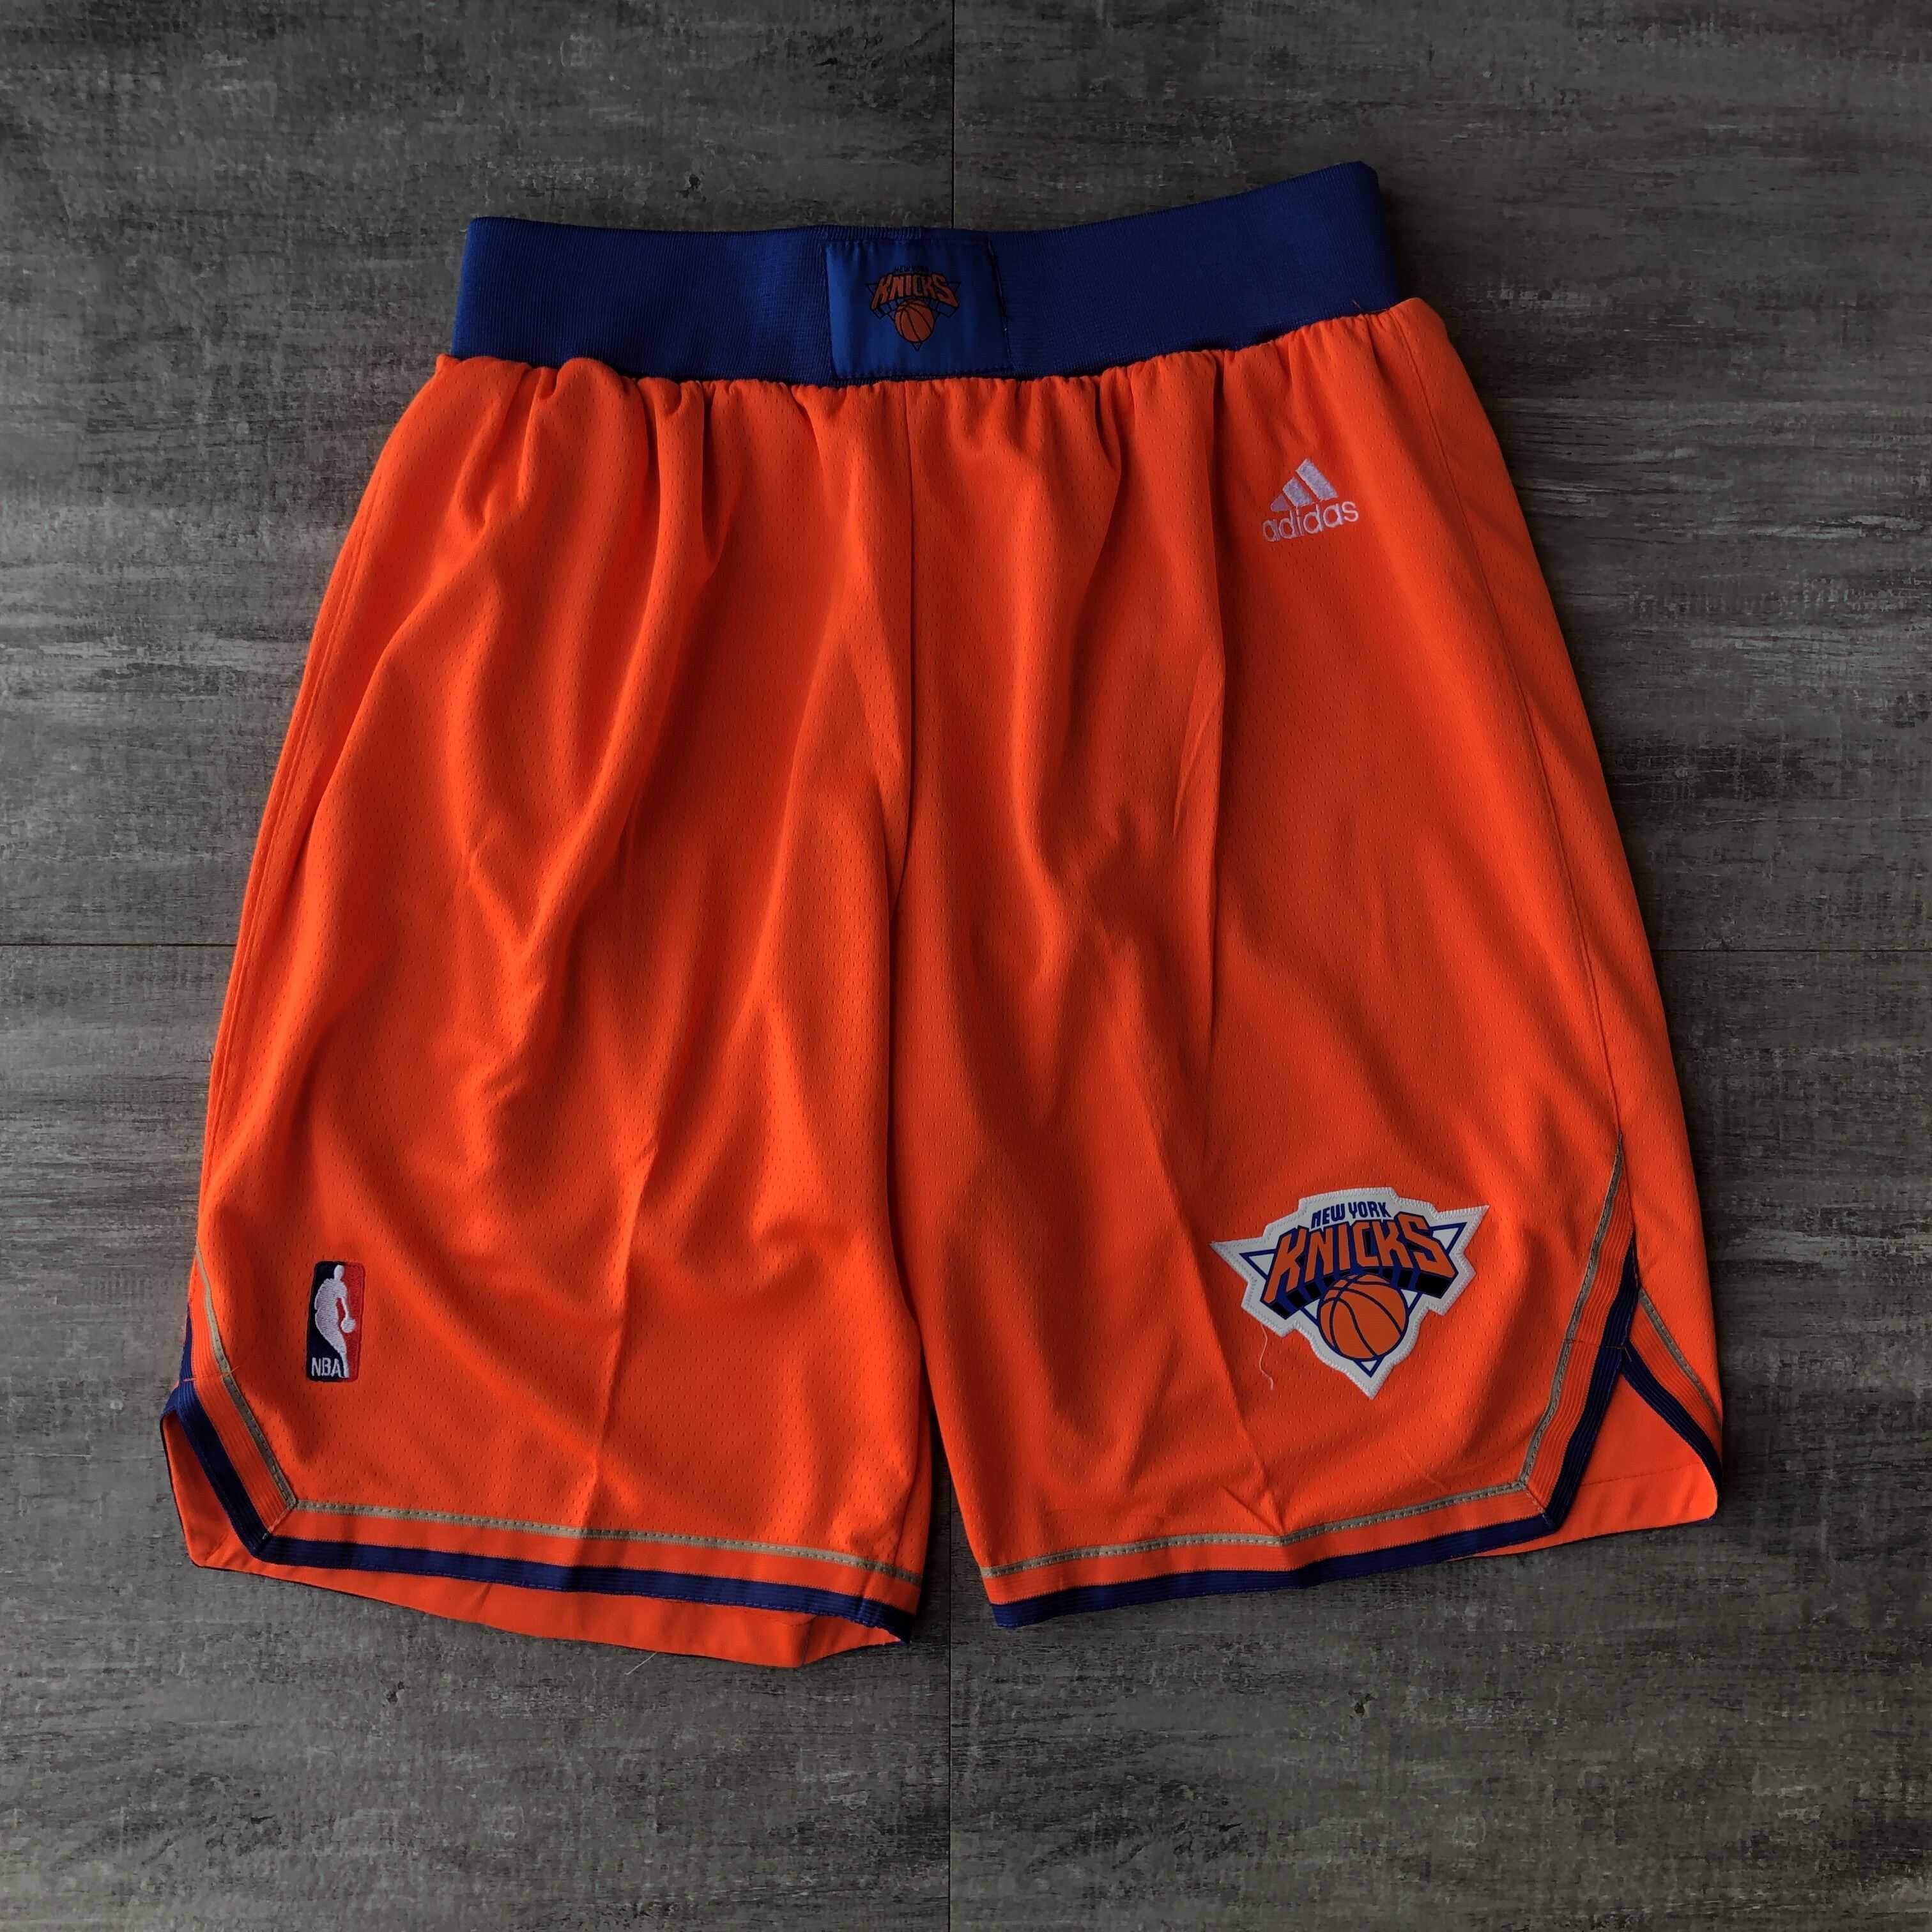 Men NBA New York Knicks Orange Shorts 04161